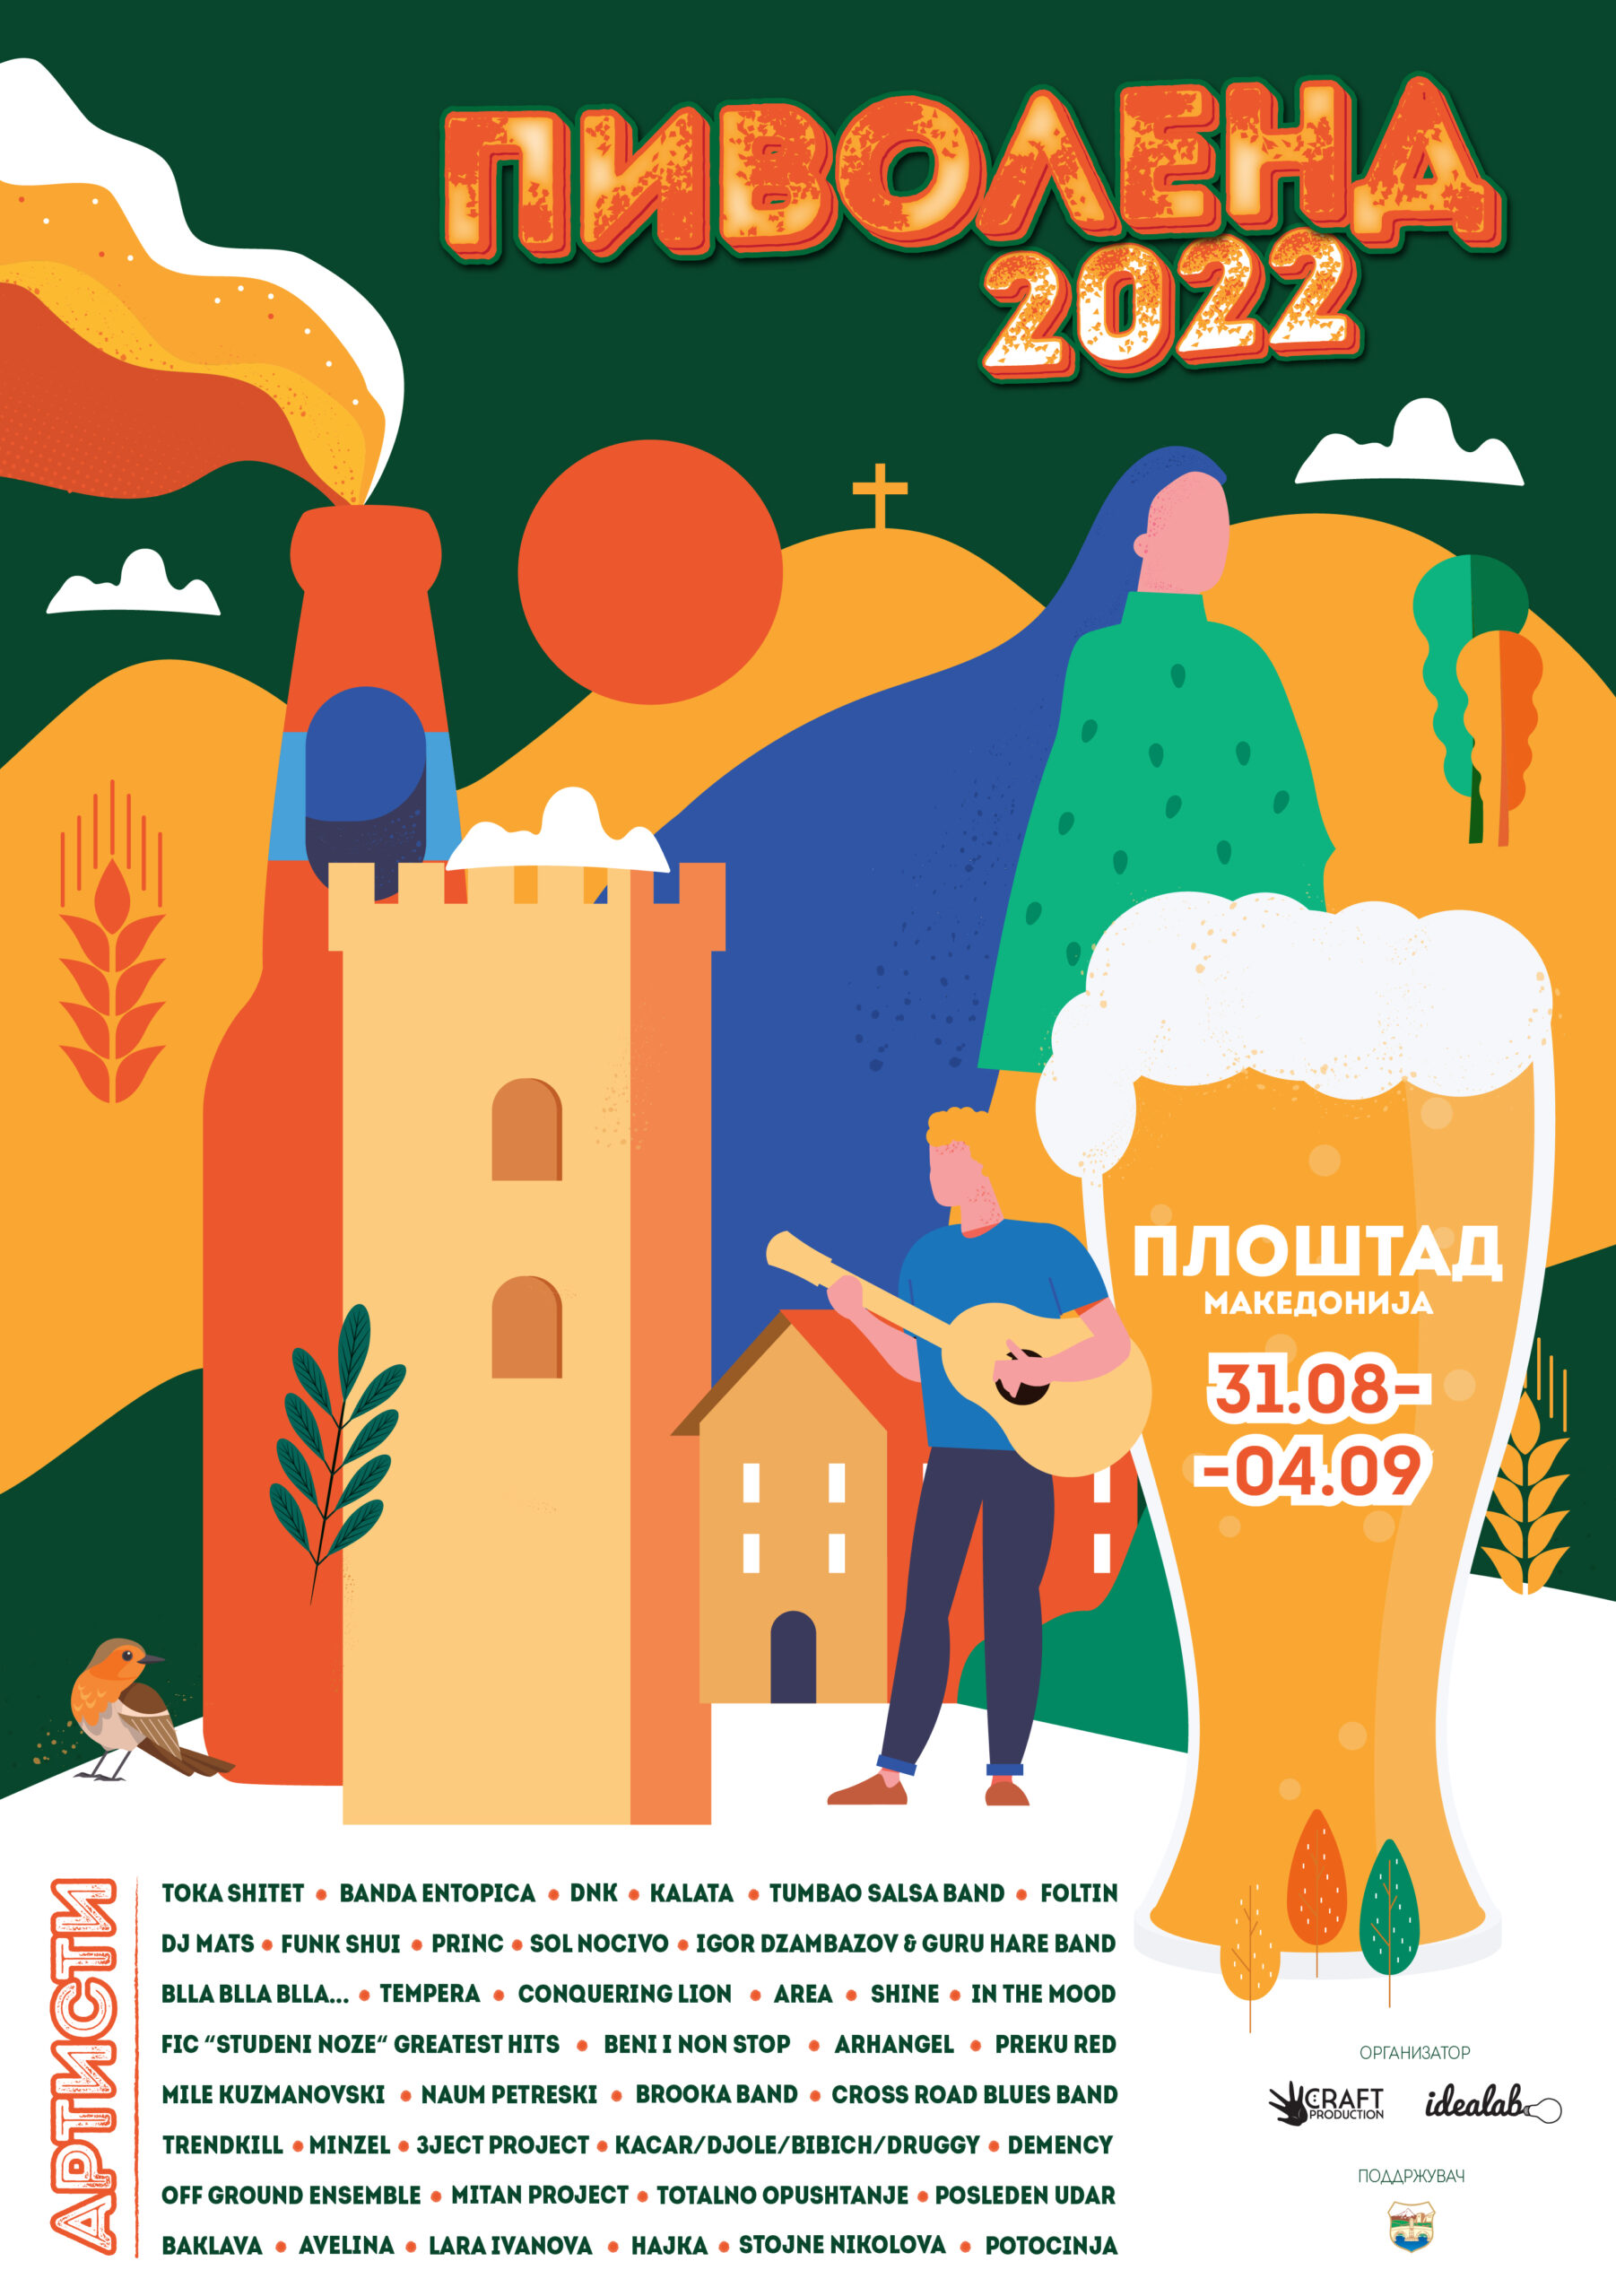 Пет дена ПИВОЛЕНД 2022 – Музика, над 100 видови на пиво, забава и среќно Скопје